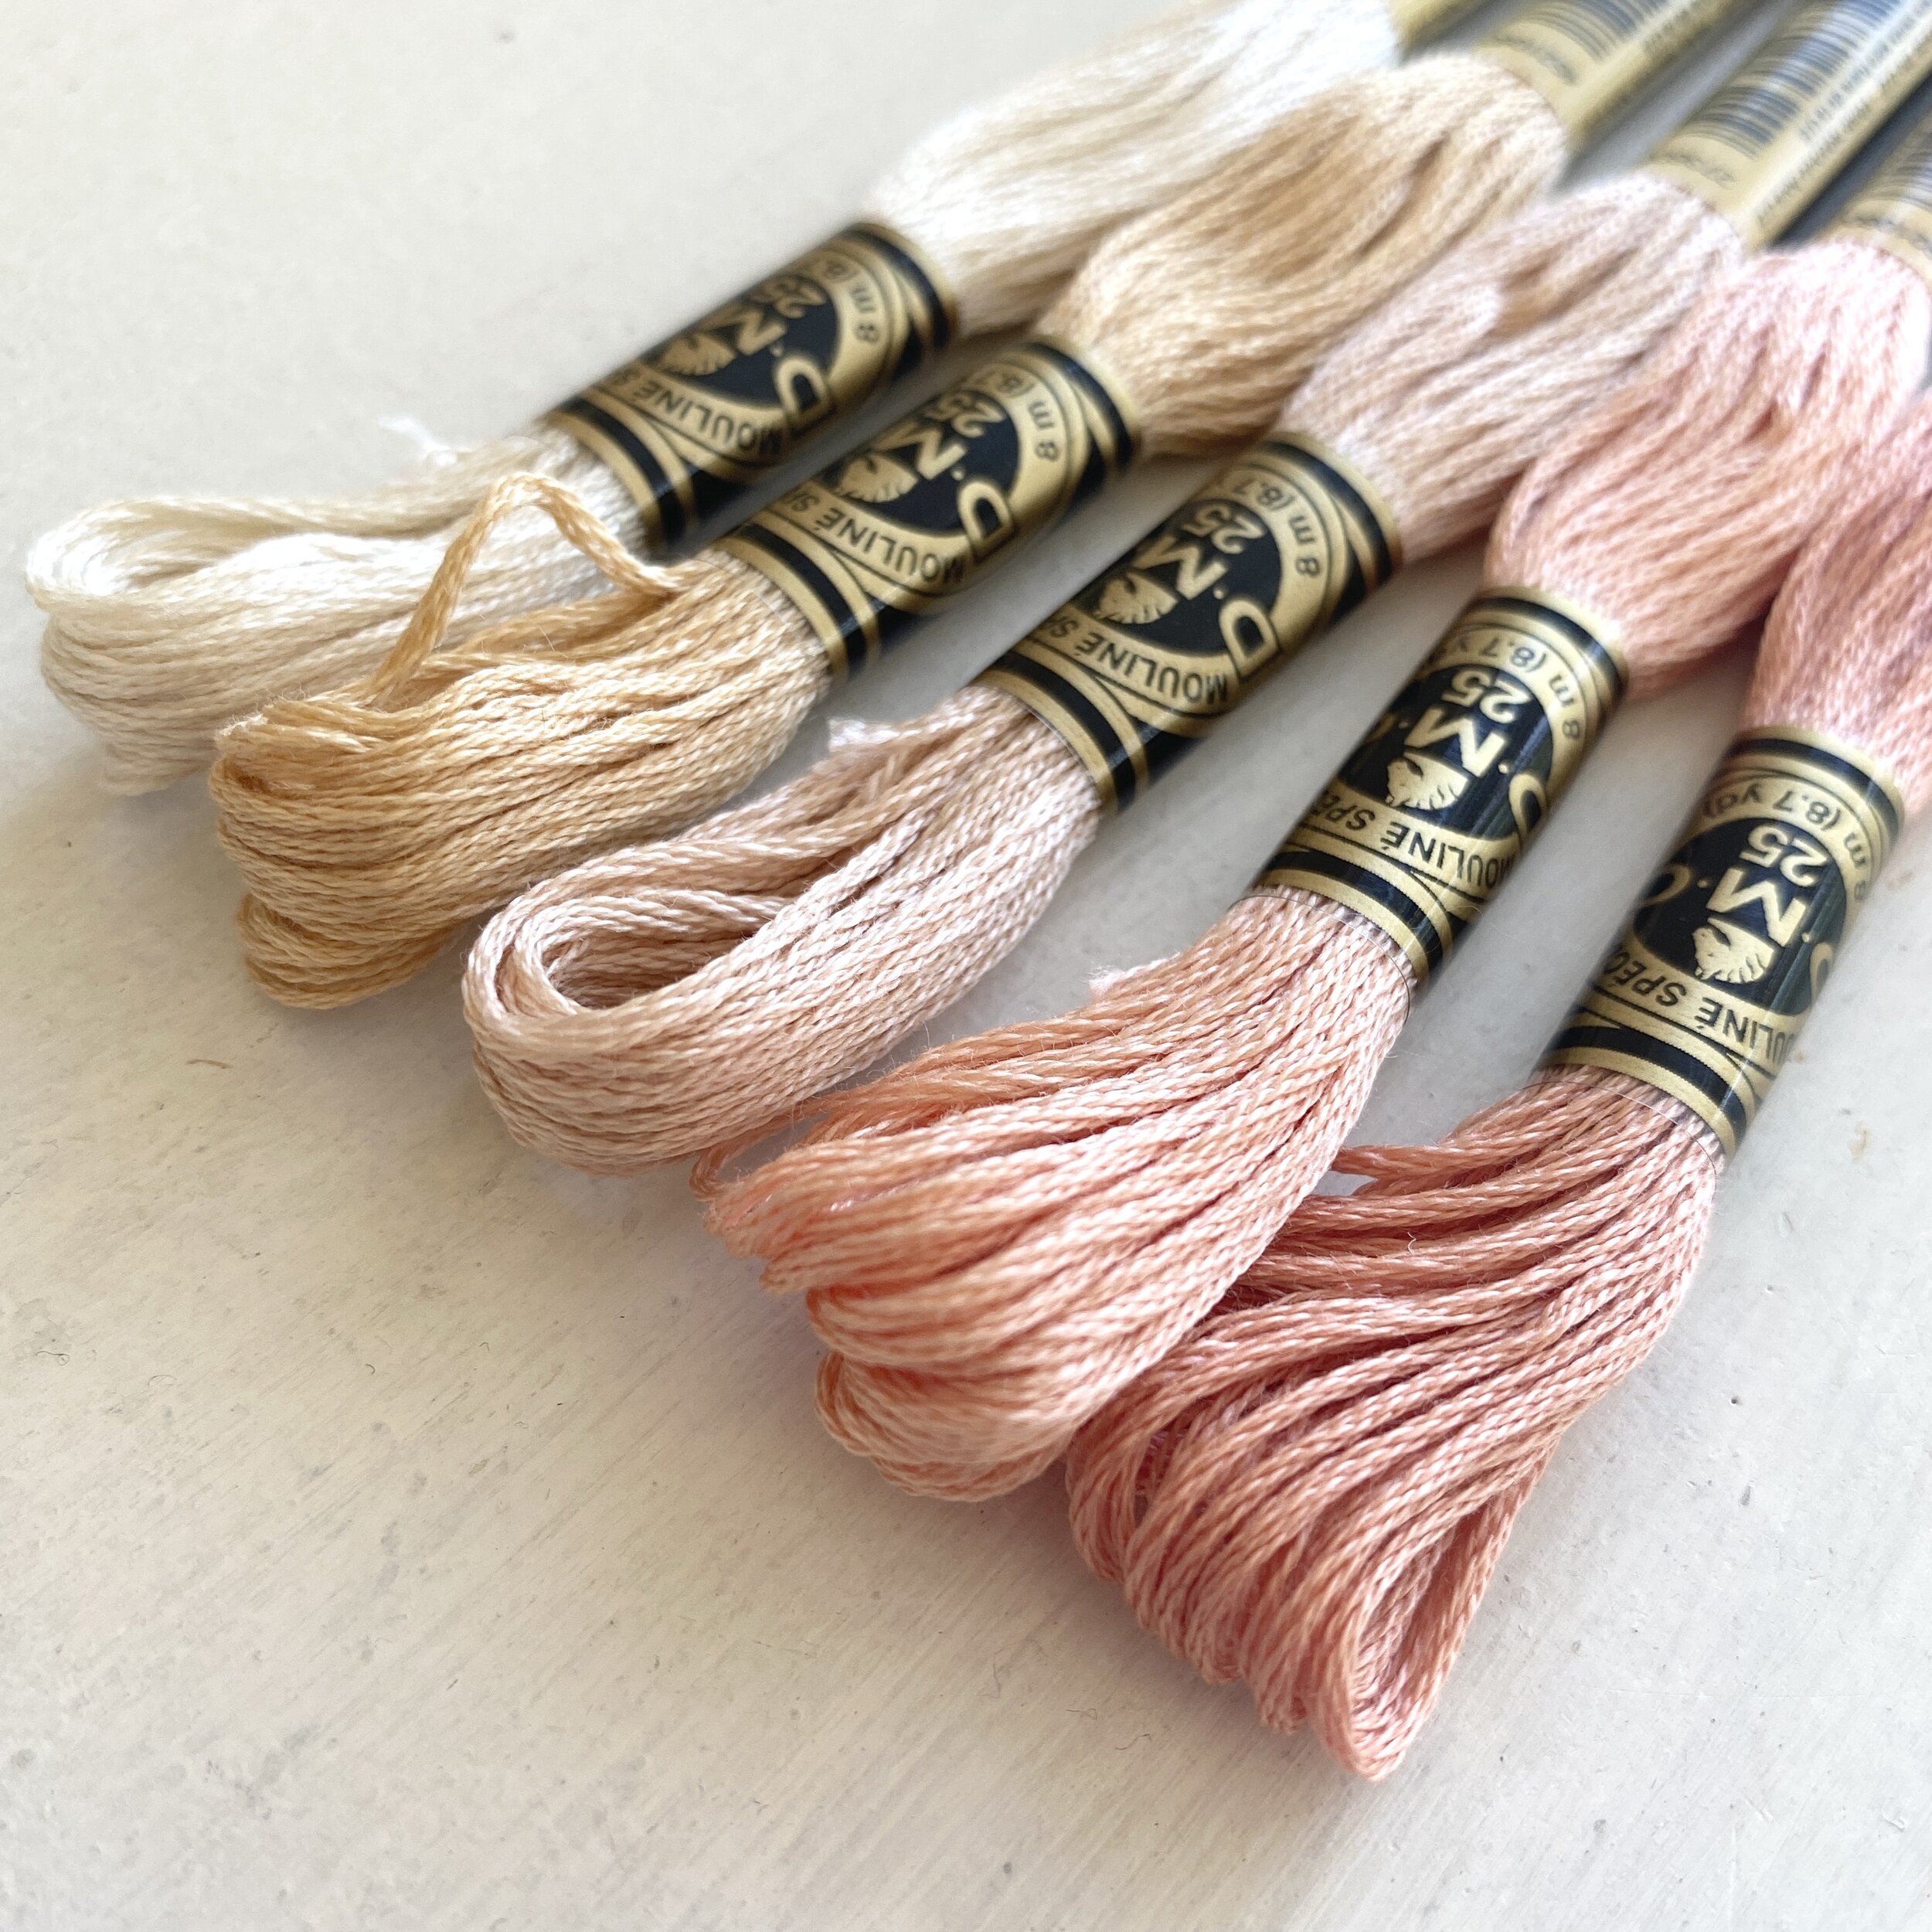 Blush Bundle DMC Embroidery Floss Set — SMALLWOODS STUDIOS